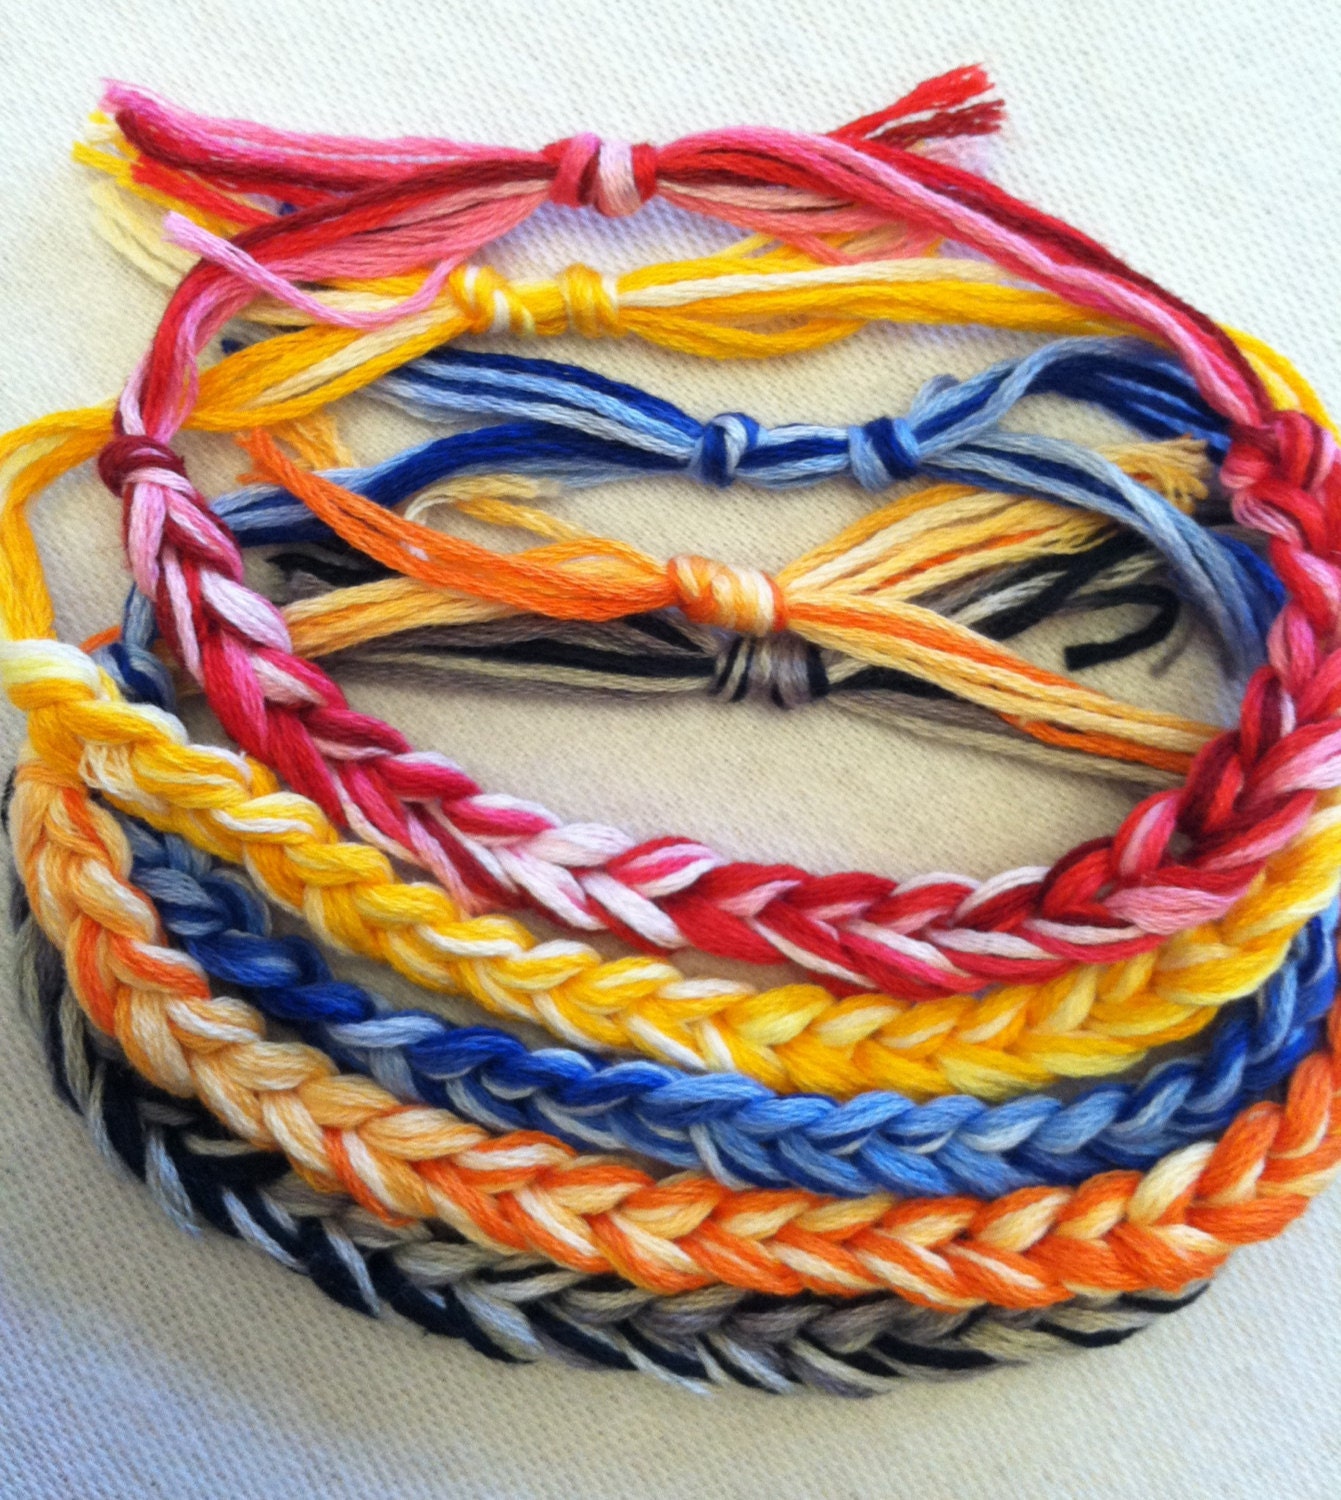 Crochet Friendship Bracelet, Thread Bracelet, Woven Bracelet, Bff